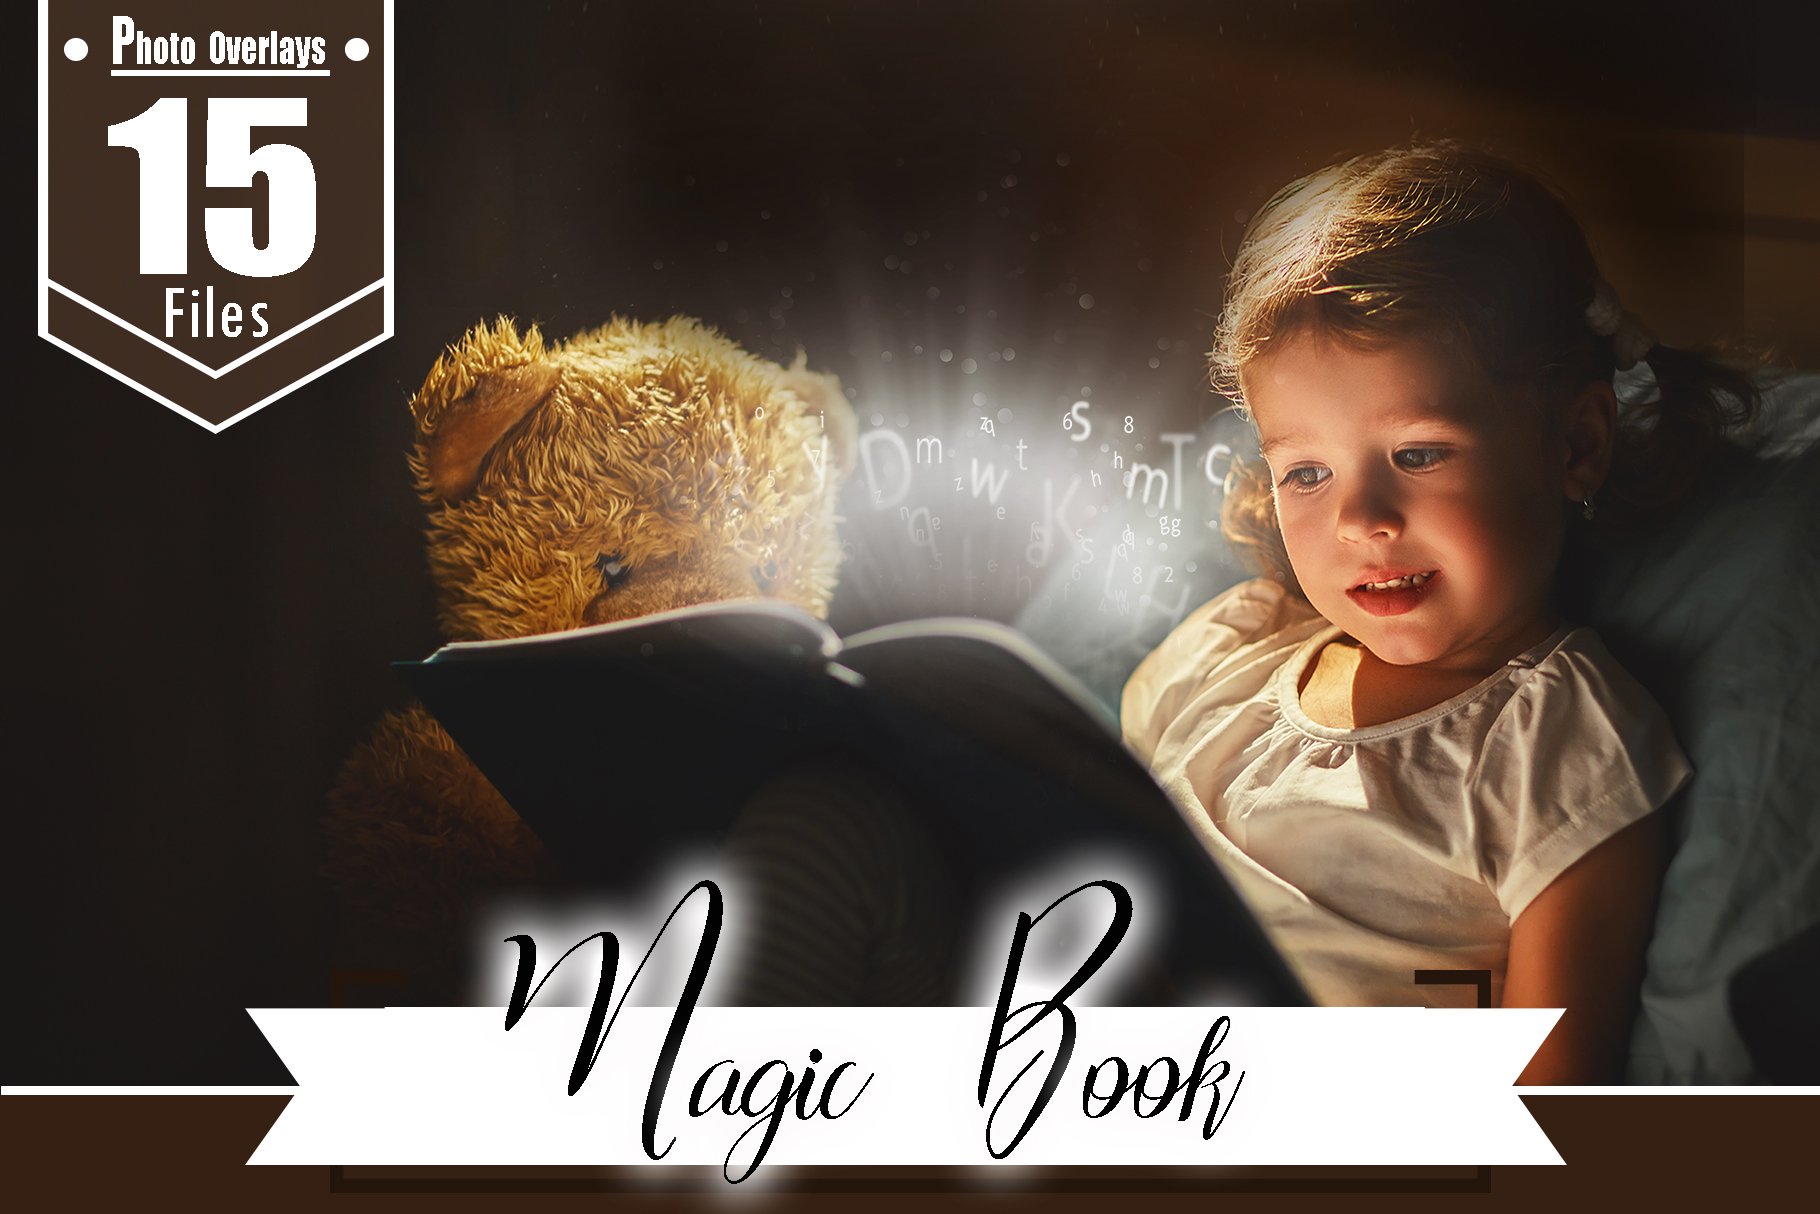 15 magic shine book photo overlayscover image.